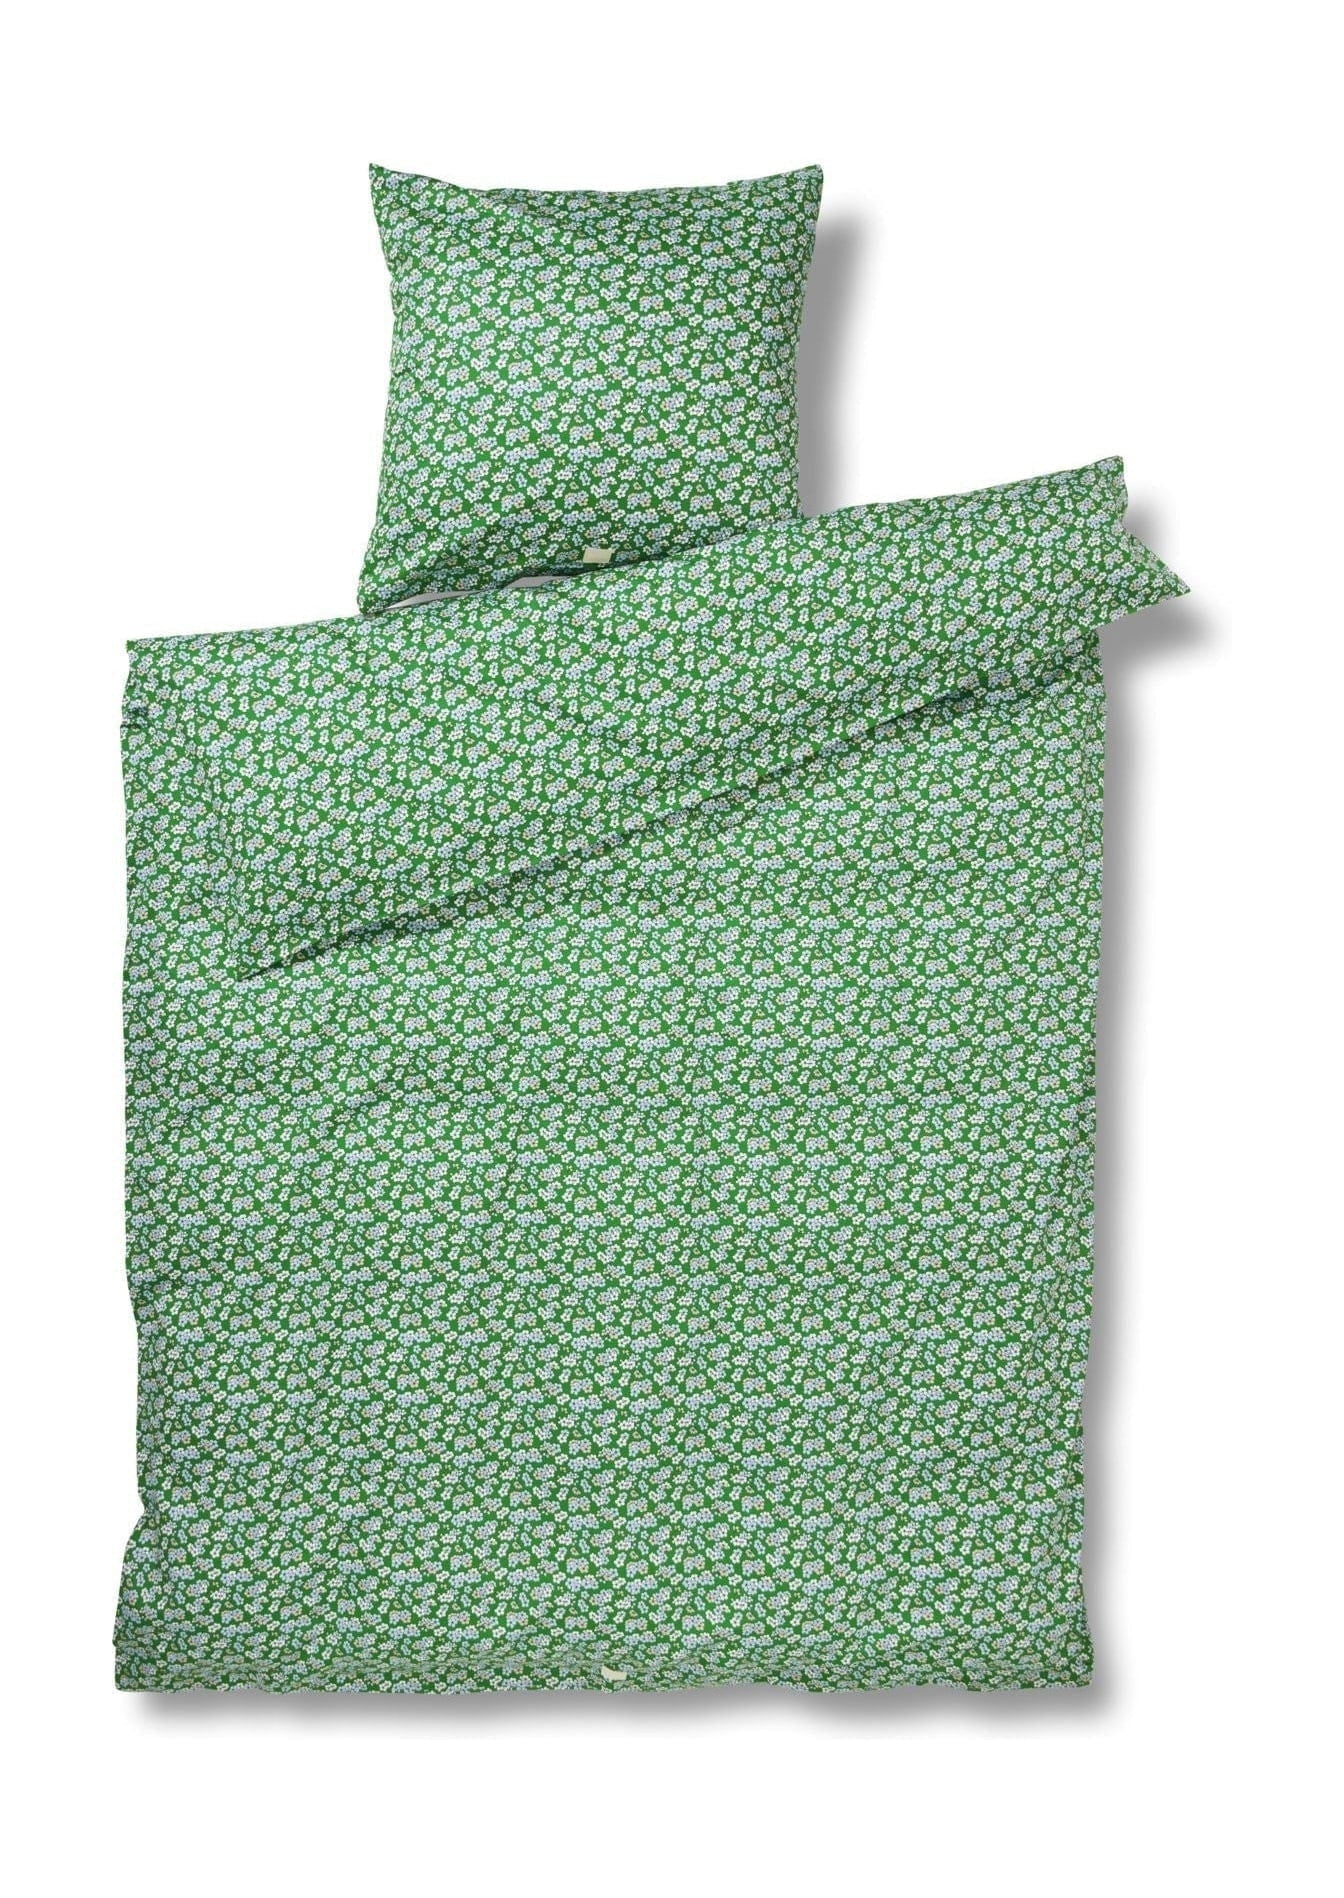 Juna Pleasantly Bed Linen 140x220 Cm, Green